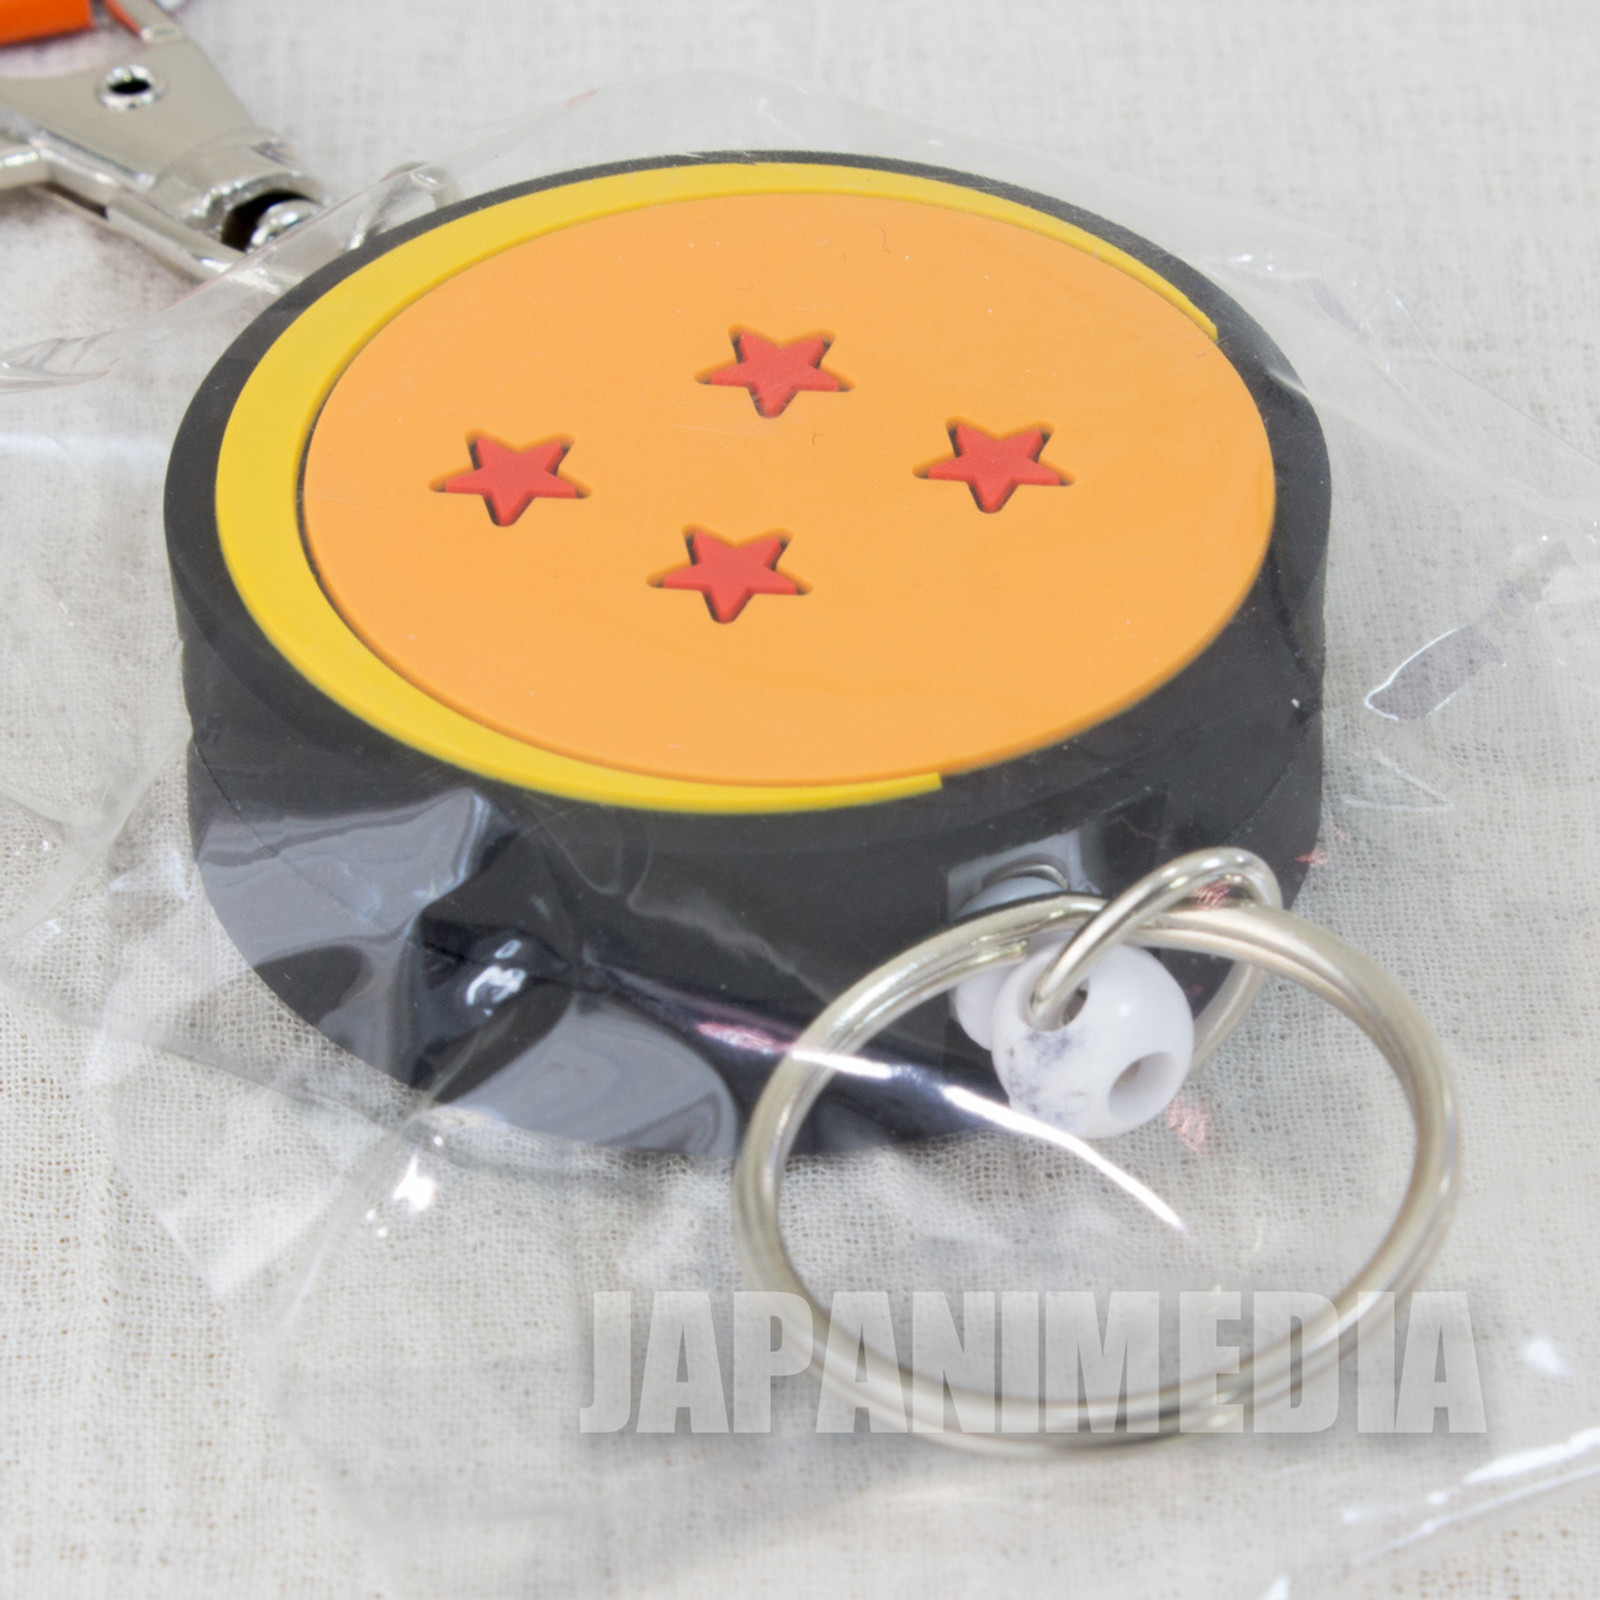 Dragon Ball Z 4th Ball Rubber Mascot Reel Keychain JAPAN ANIME